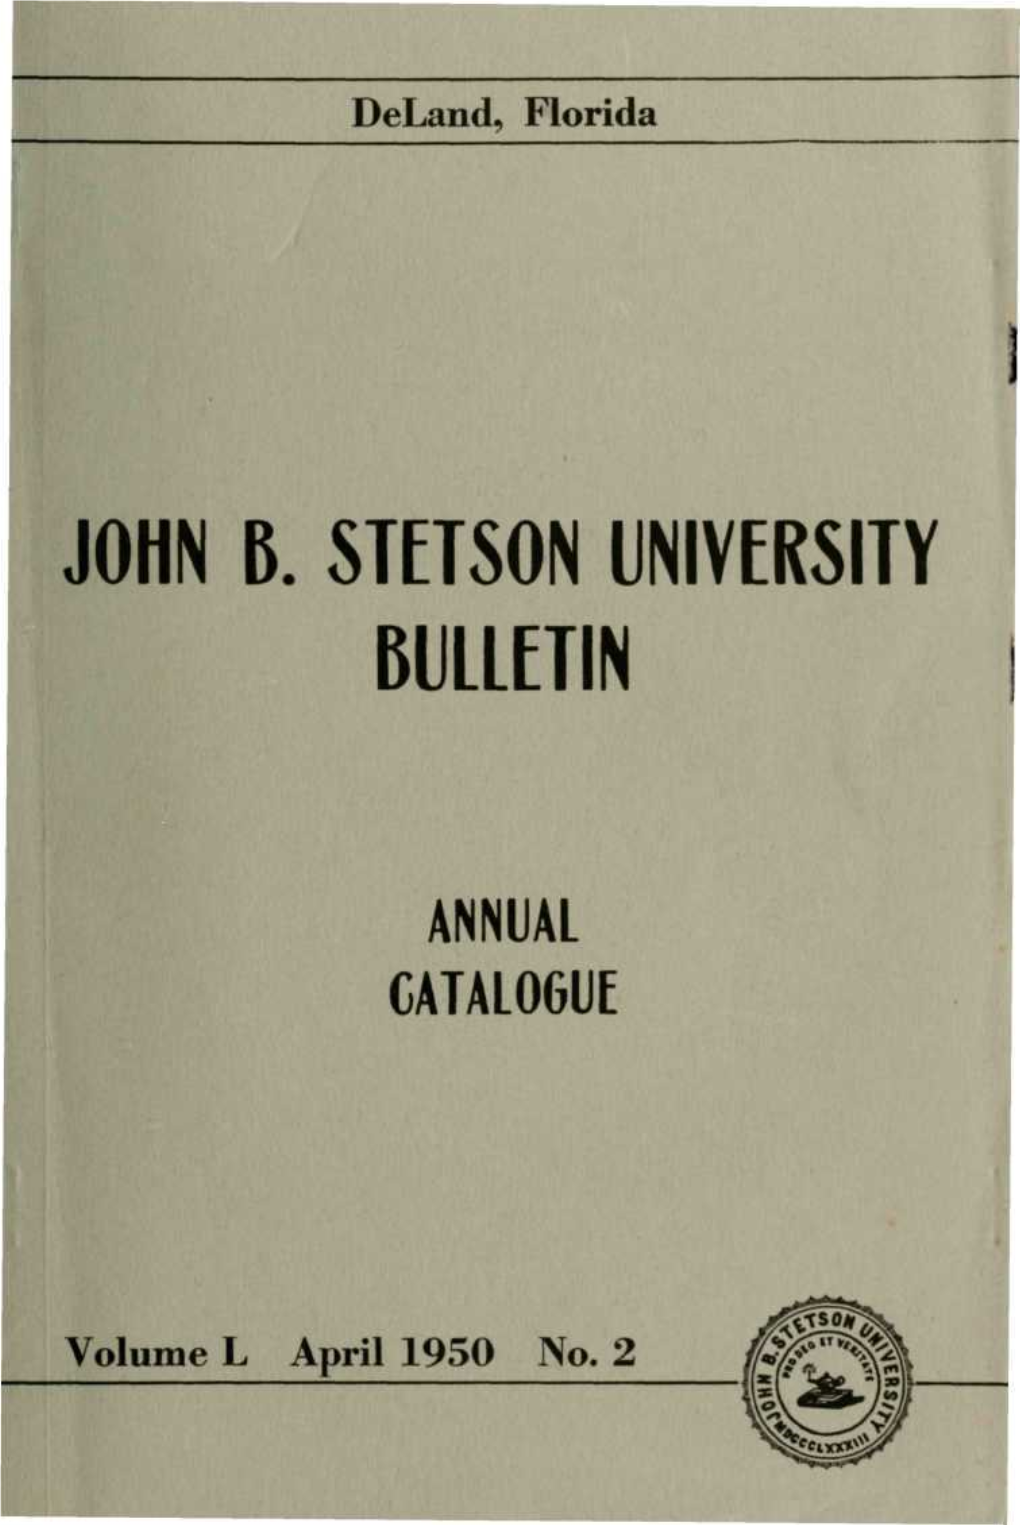 John B. Stetson University Bulletin